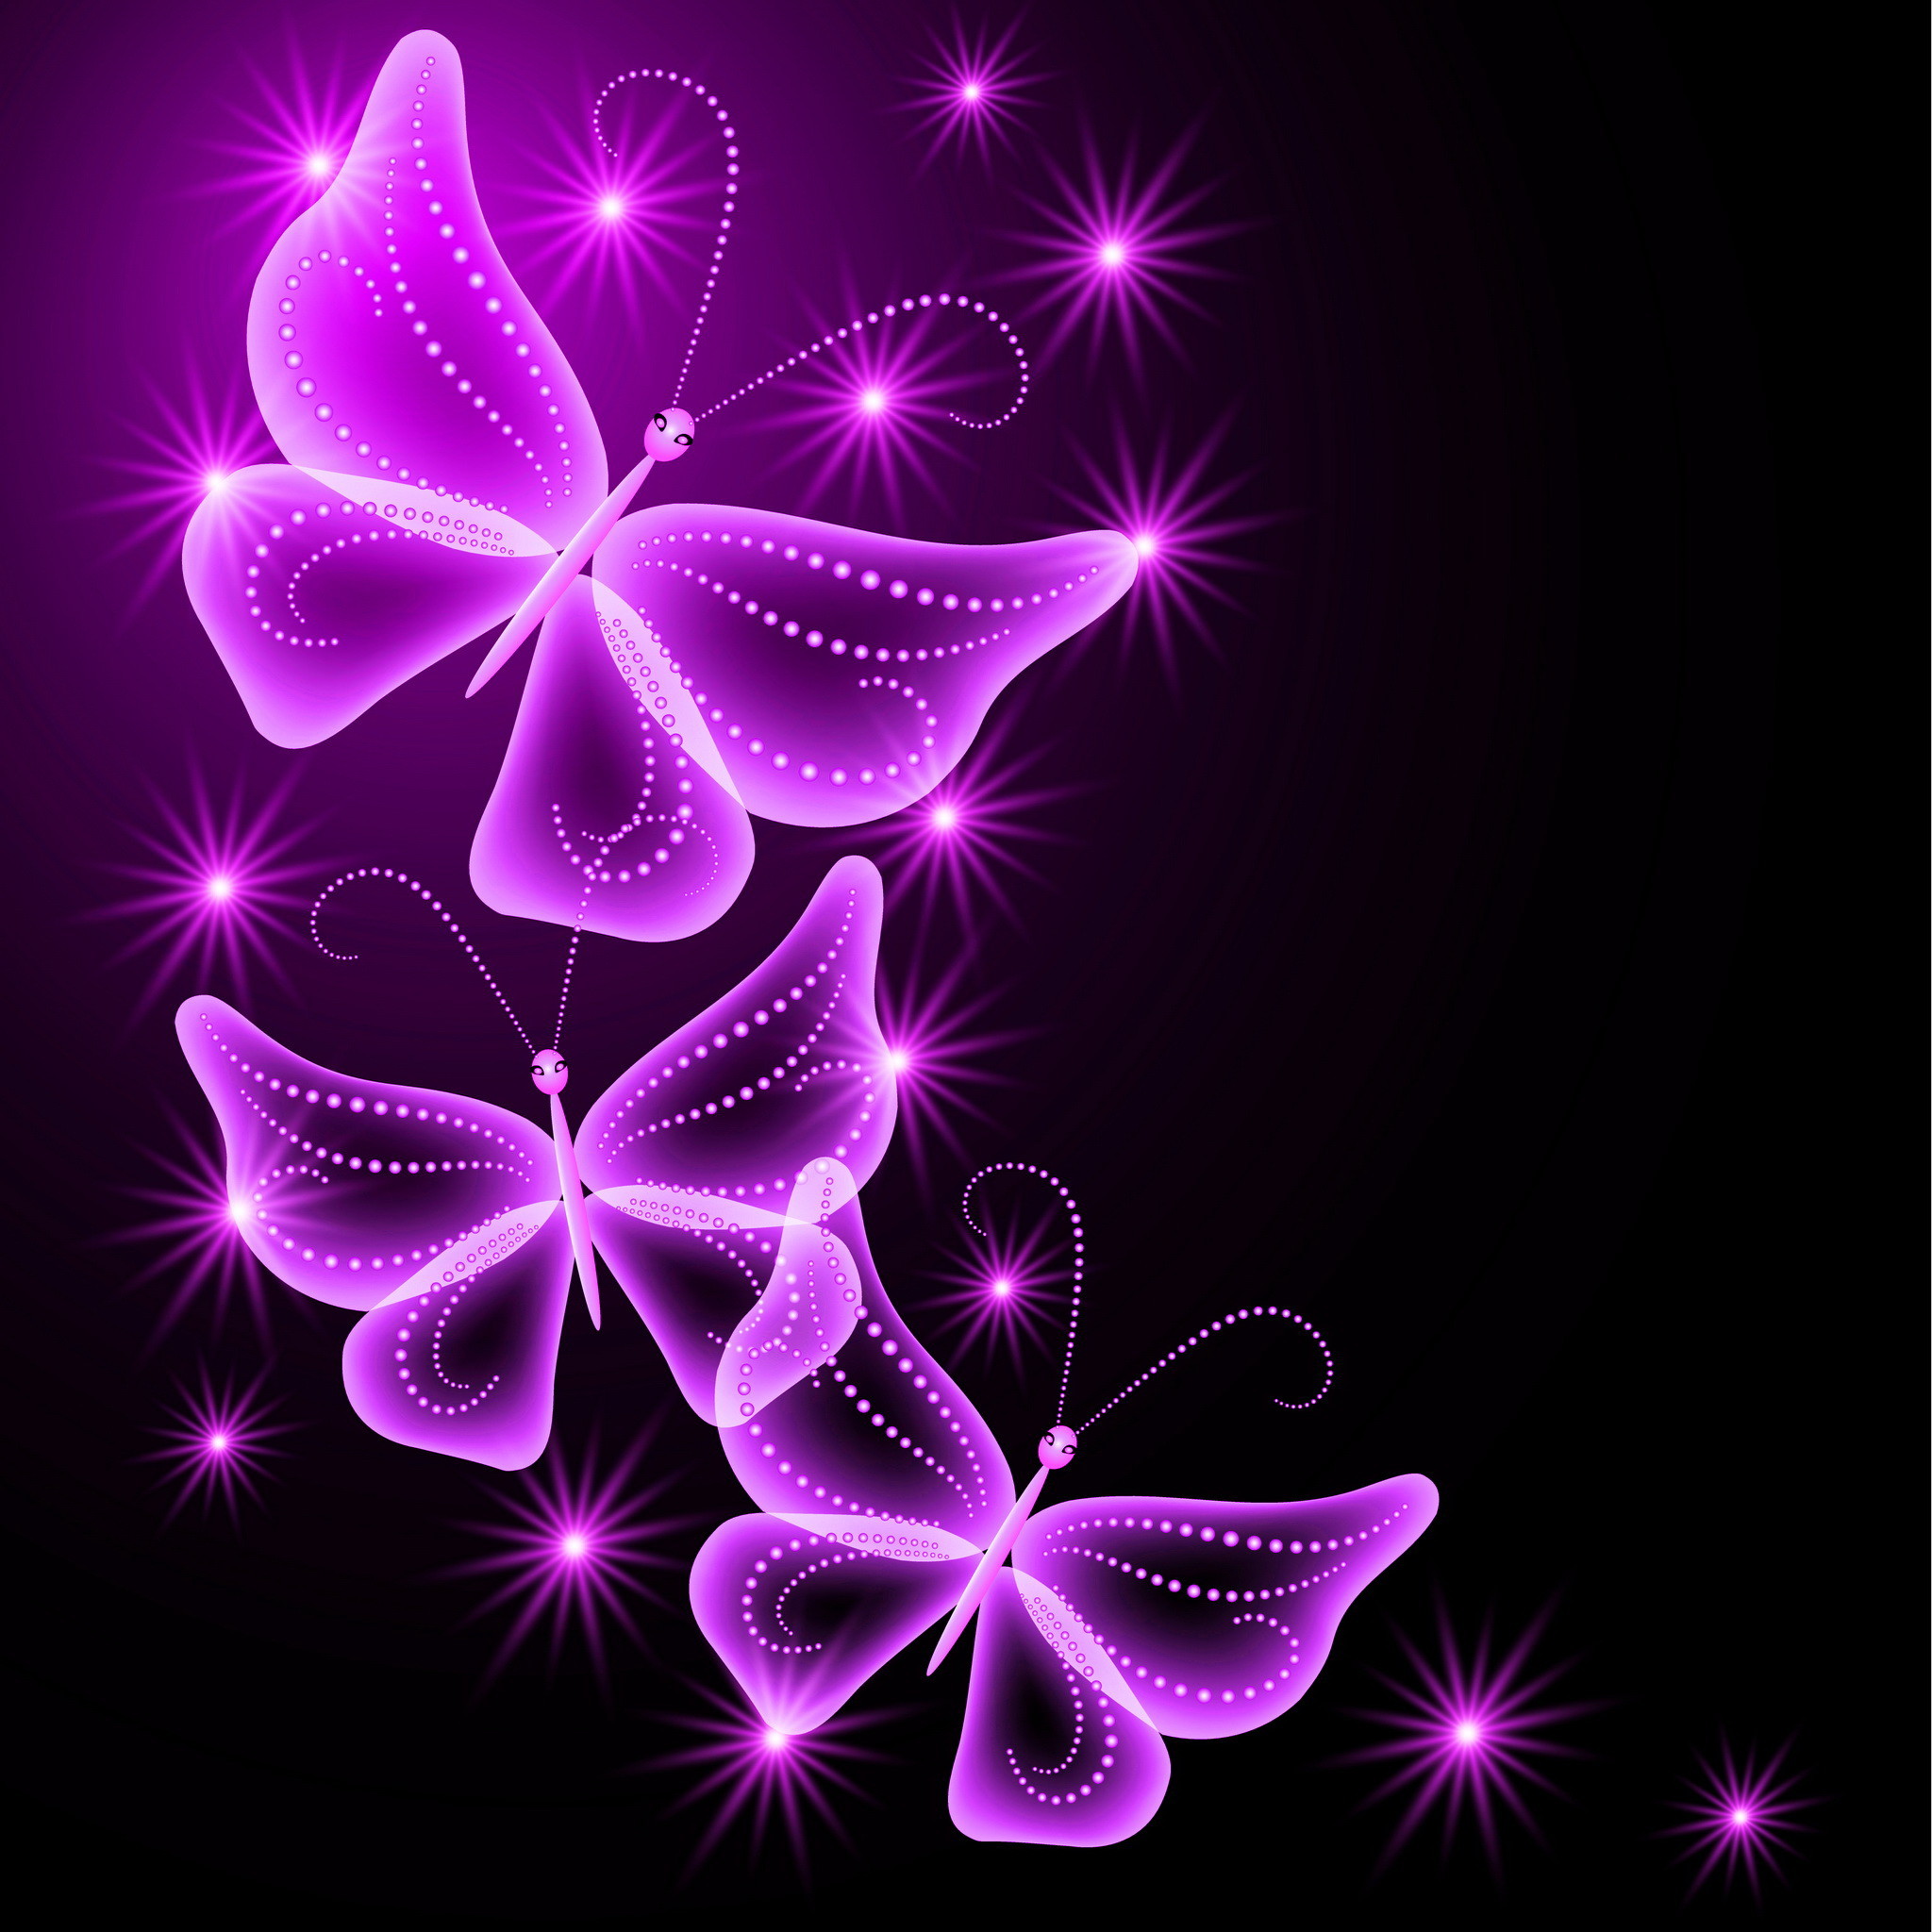 mini carta da parati ipad tumblr,viola,viola,rosa,la farfalla,neon